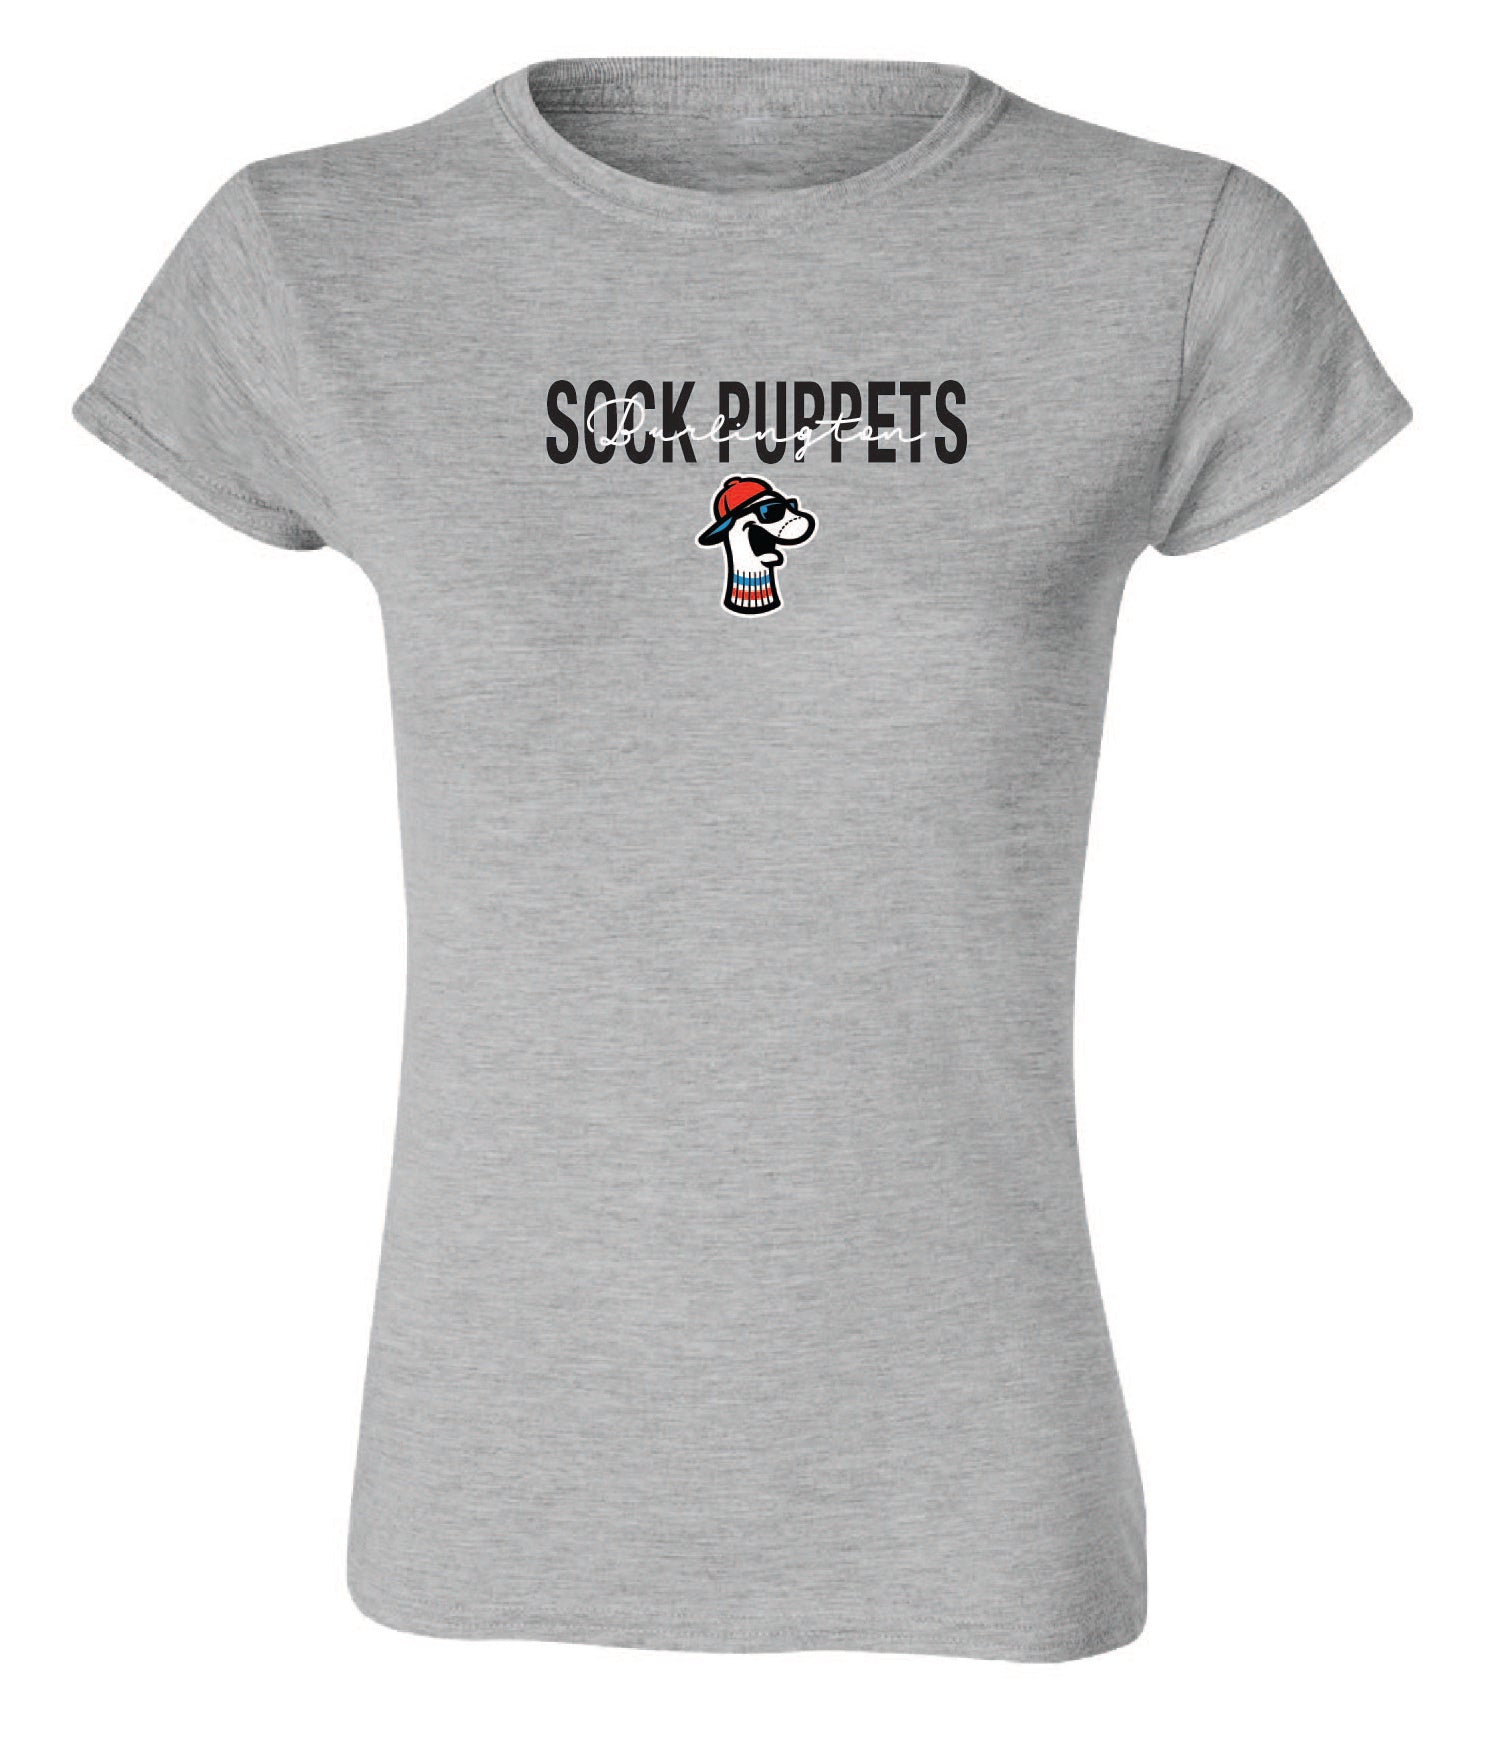 Women's Grey Script T-Shirt-0